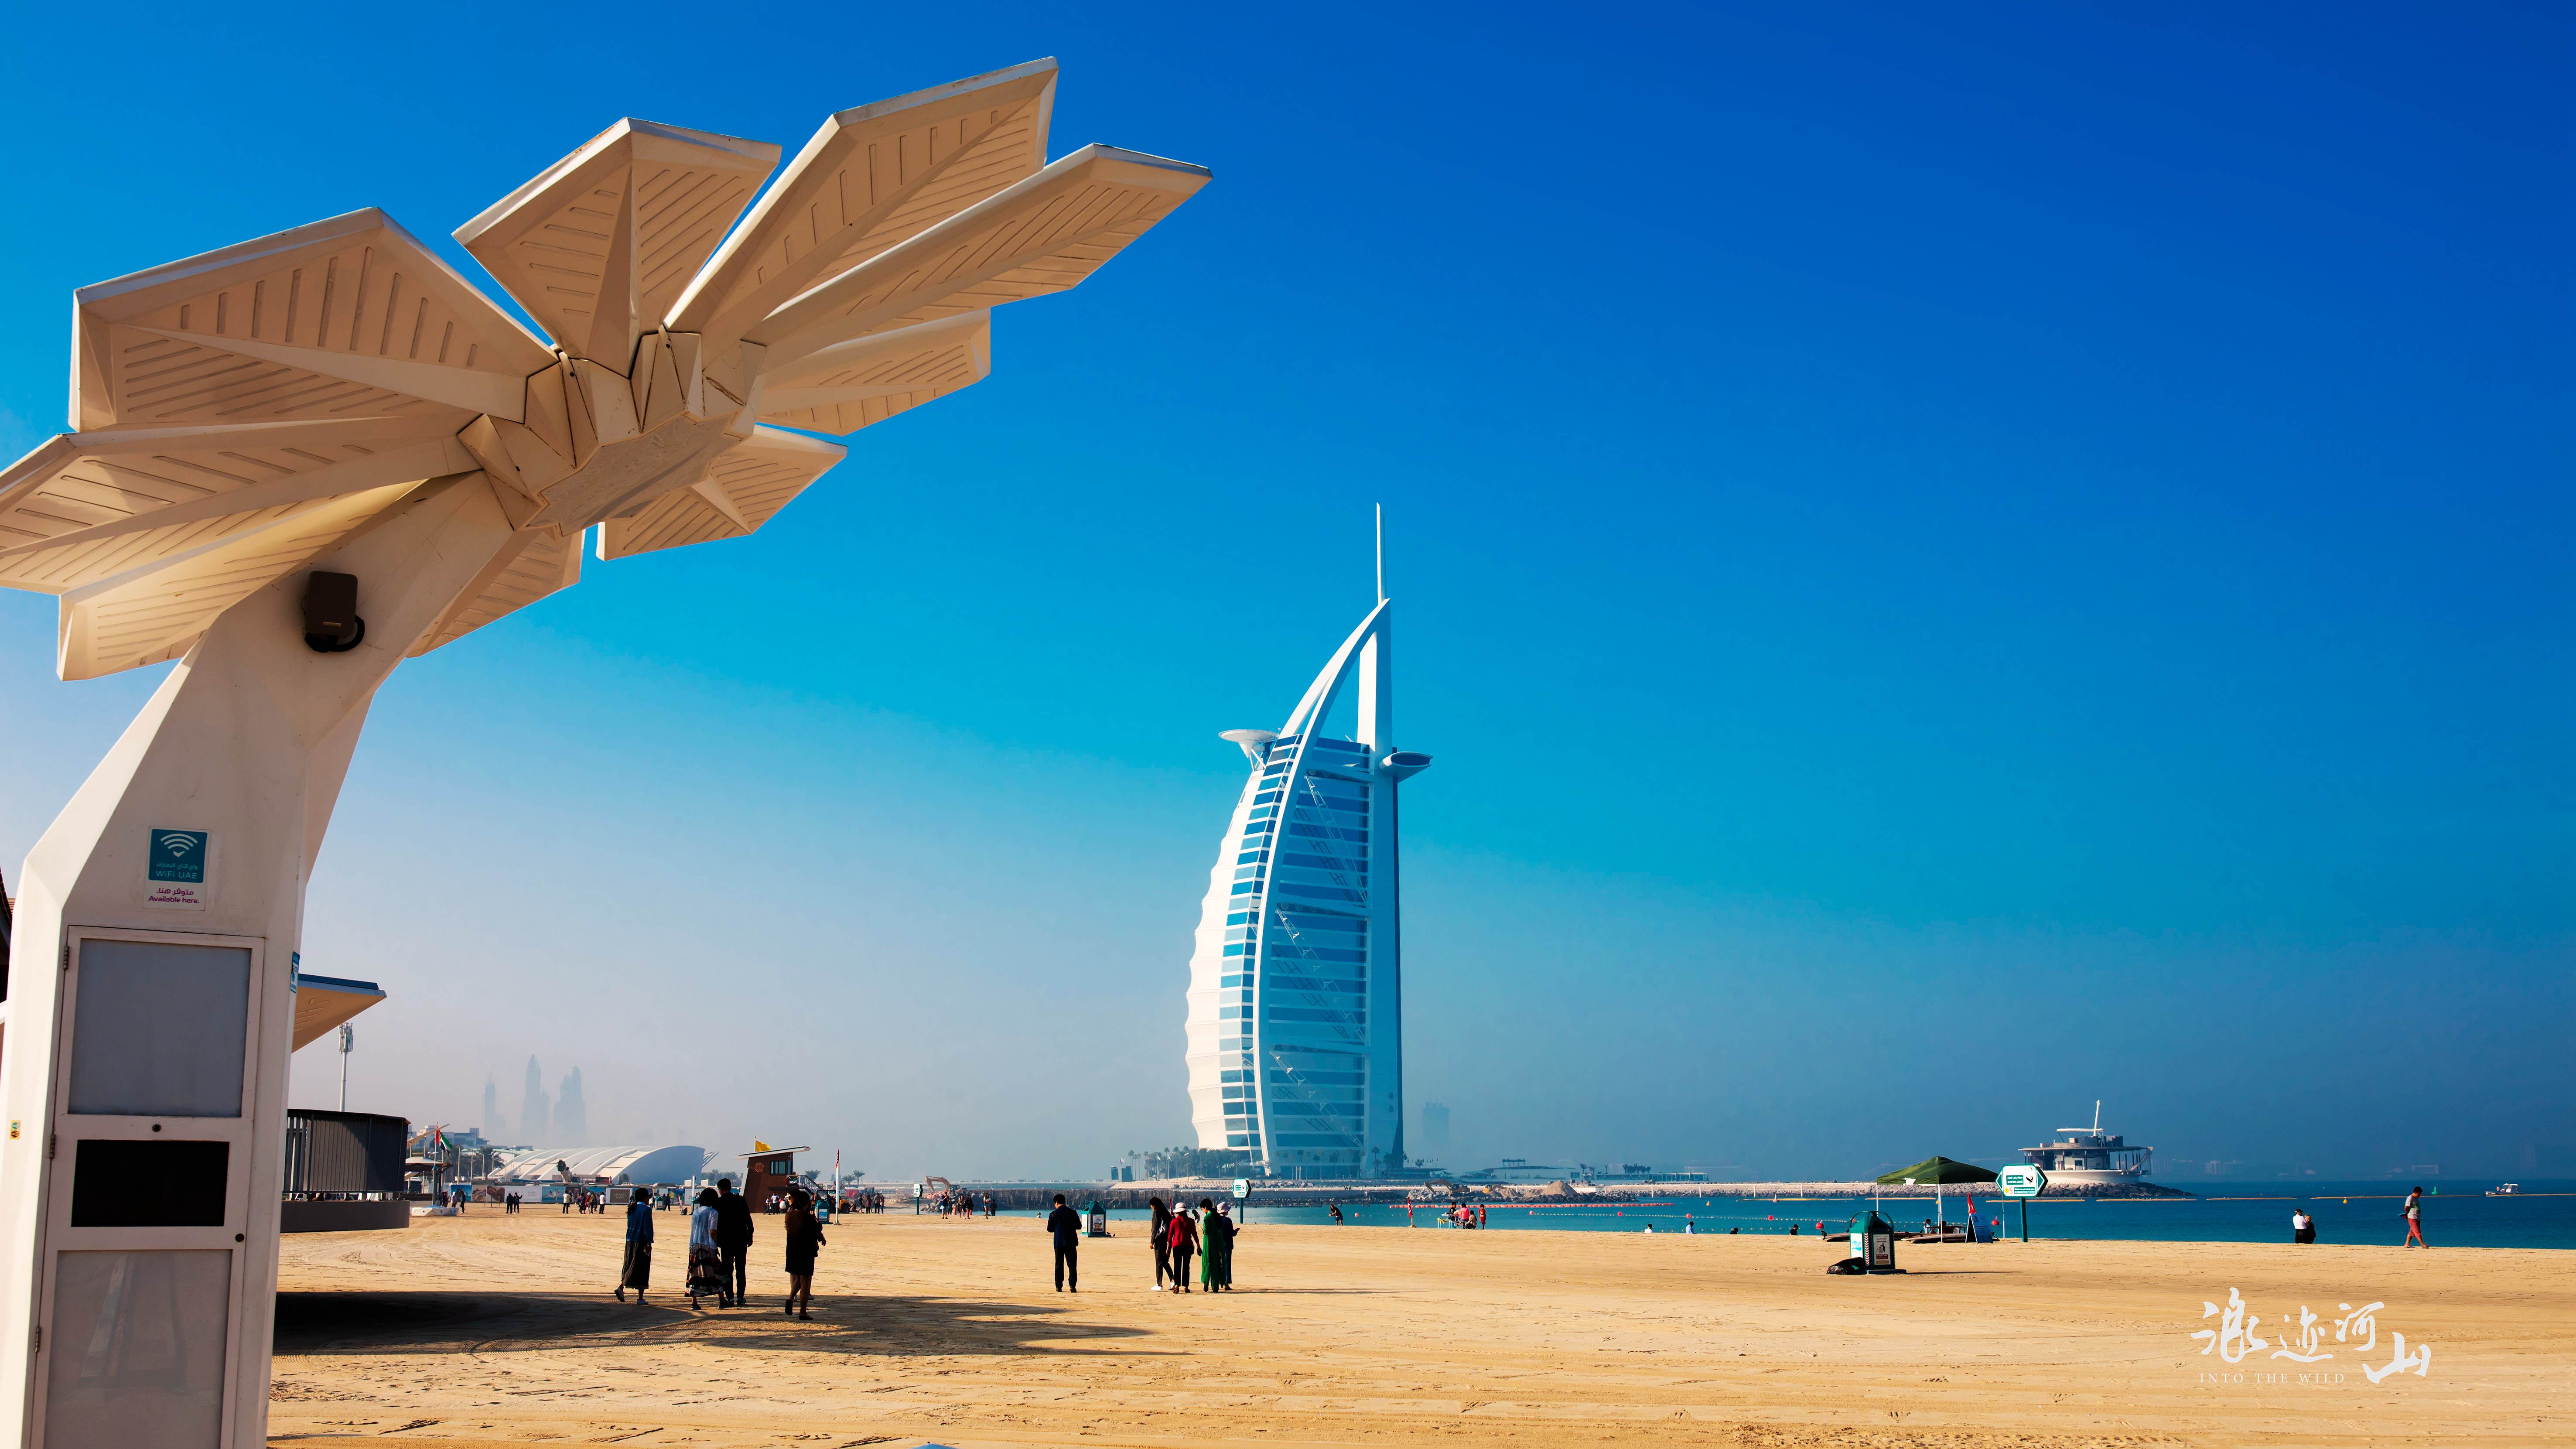 Dubai迪拜 由 bigball 创作 | 乐艺leewiART CG精英艺术社区，汇聚优秀CG艺术作品